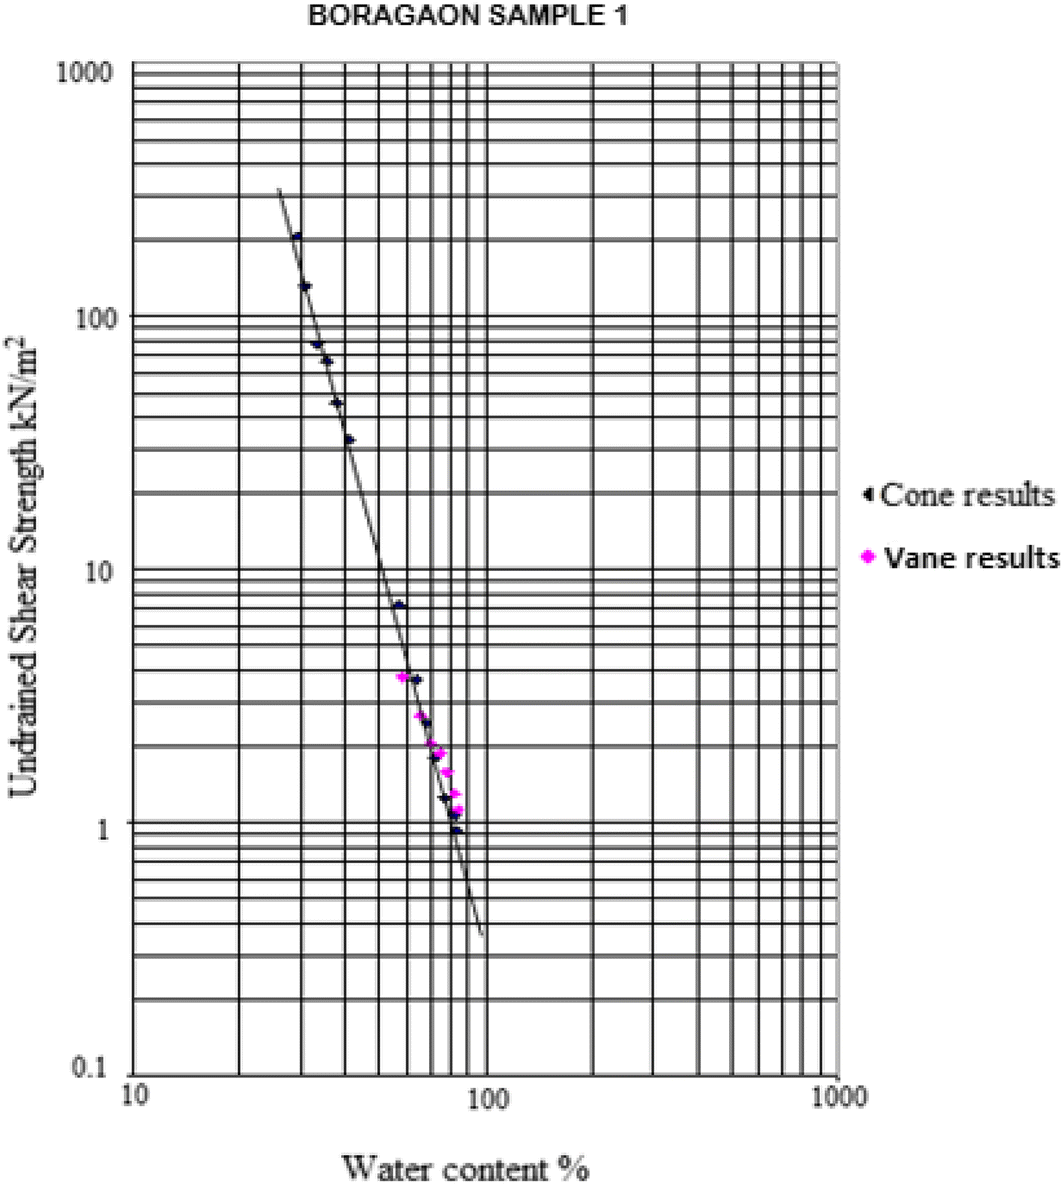 Atterberg Limits Chart